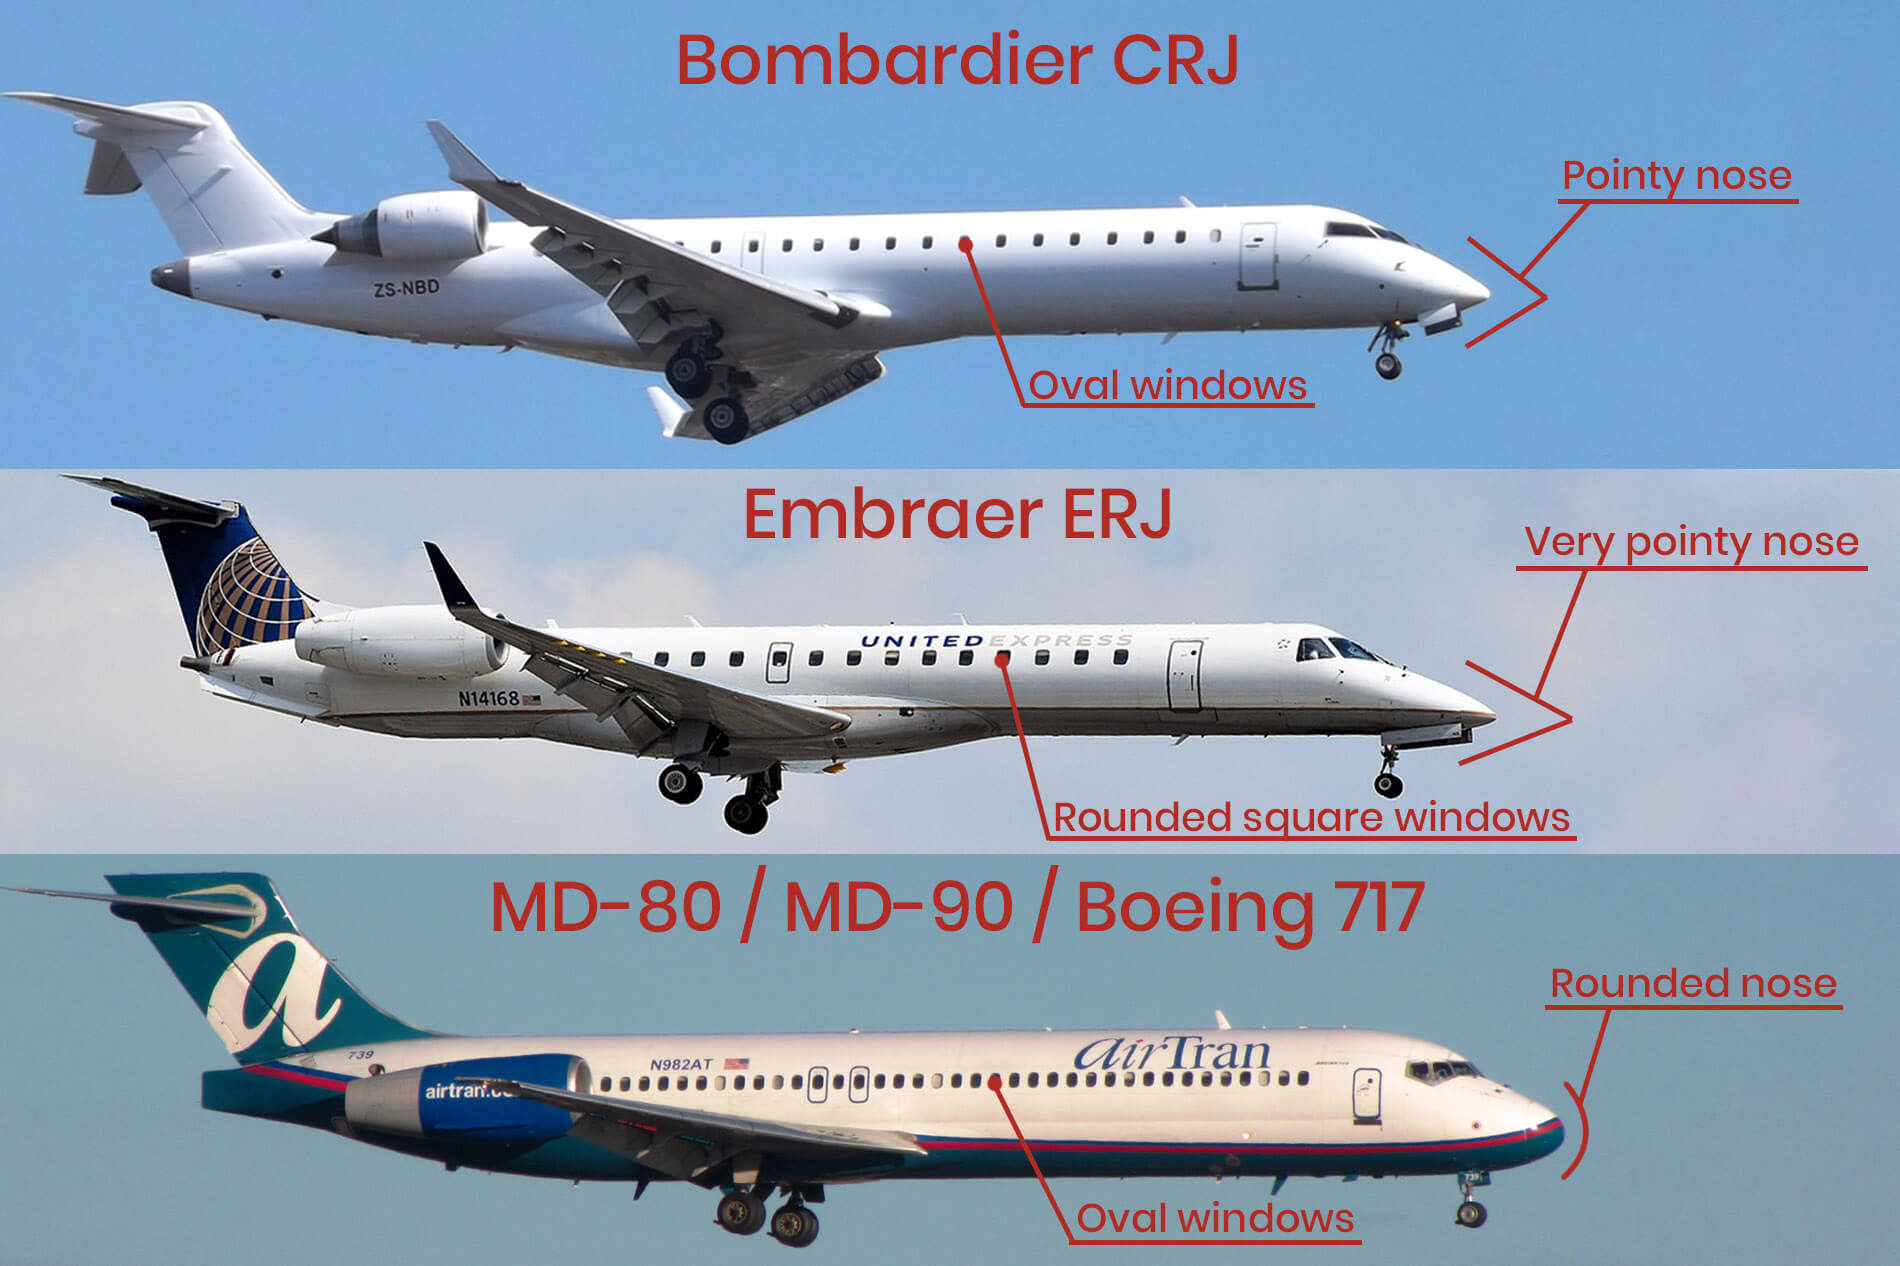 Bombardier CRJ Embraer ERJ Boeing 717 spotting guide